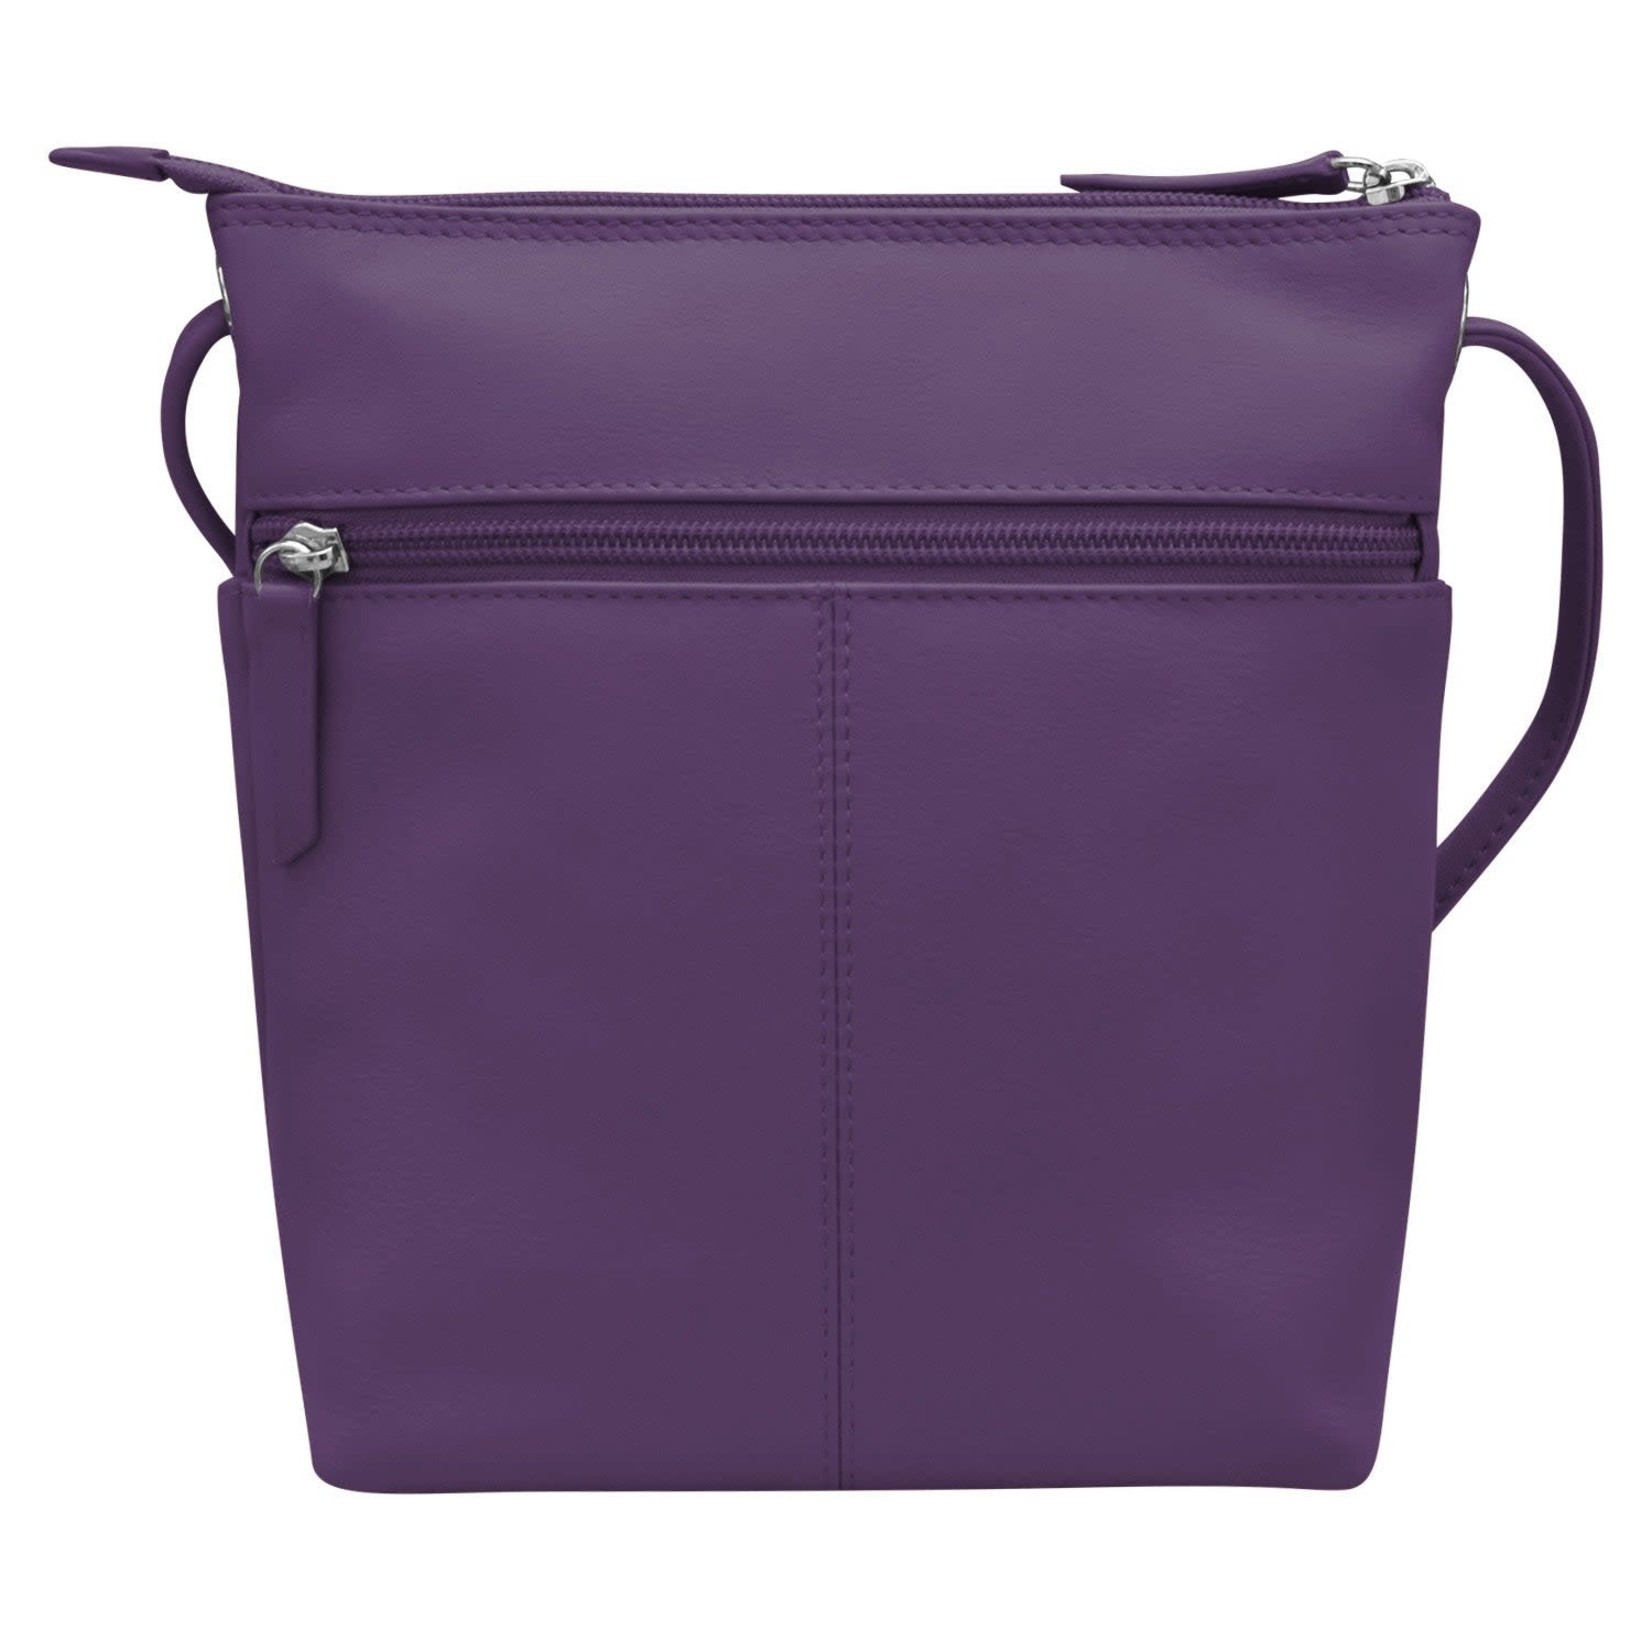 Leather Handbags and Accessories 6661 Purple - Midi Sac